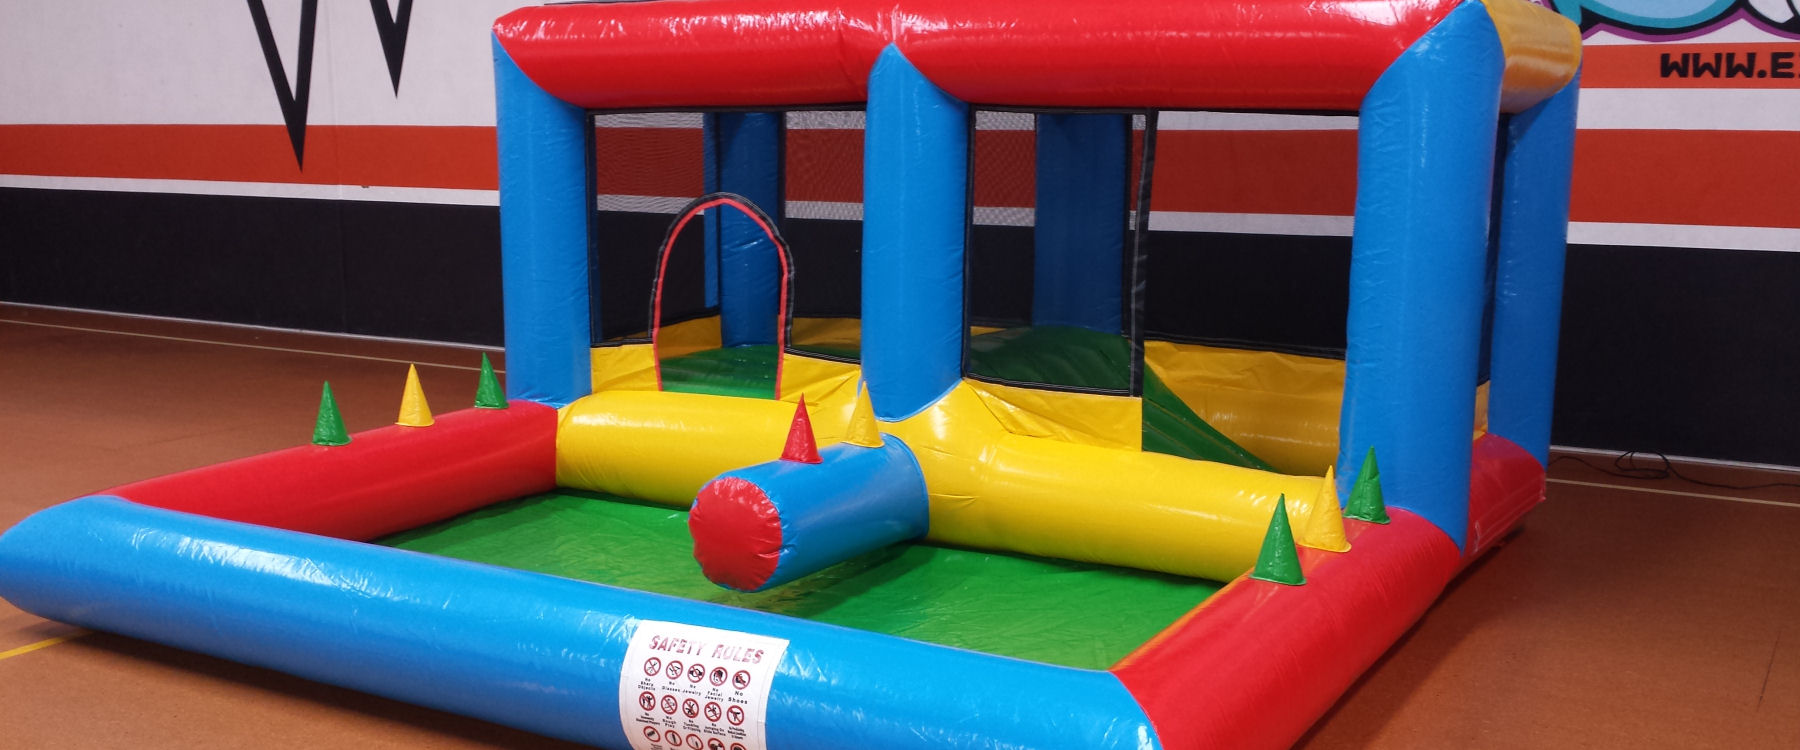 Wollongong Kids Indoor Playcentre